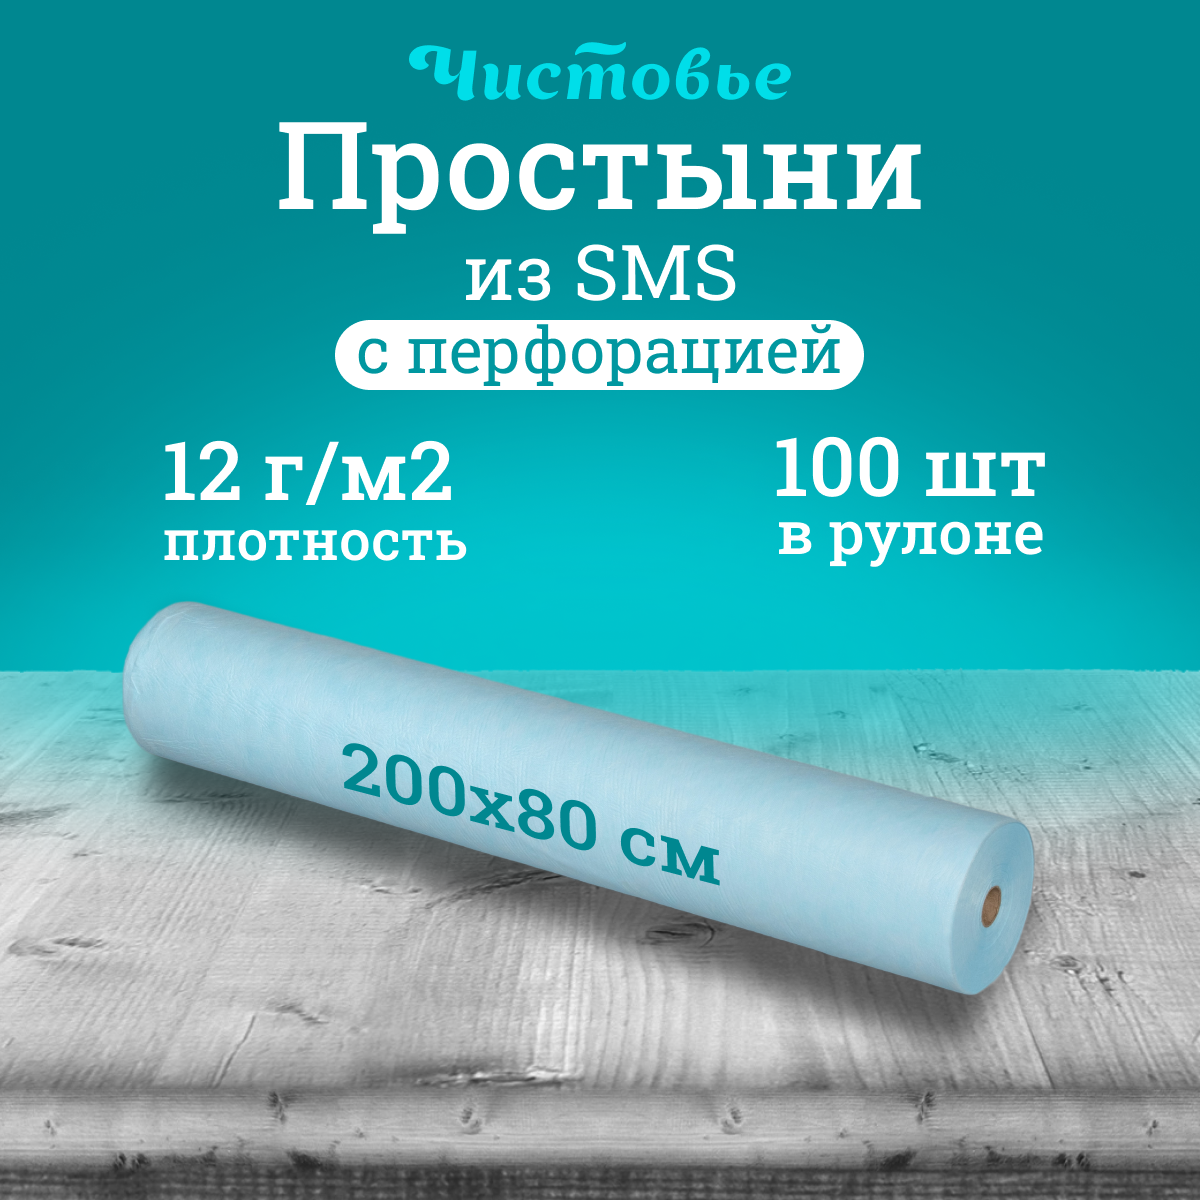 Простыня одноразовая Чистовье голубая Стандарт, SMS 200х80 см, 100 шт. в рулоне